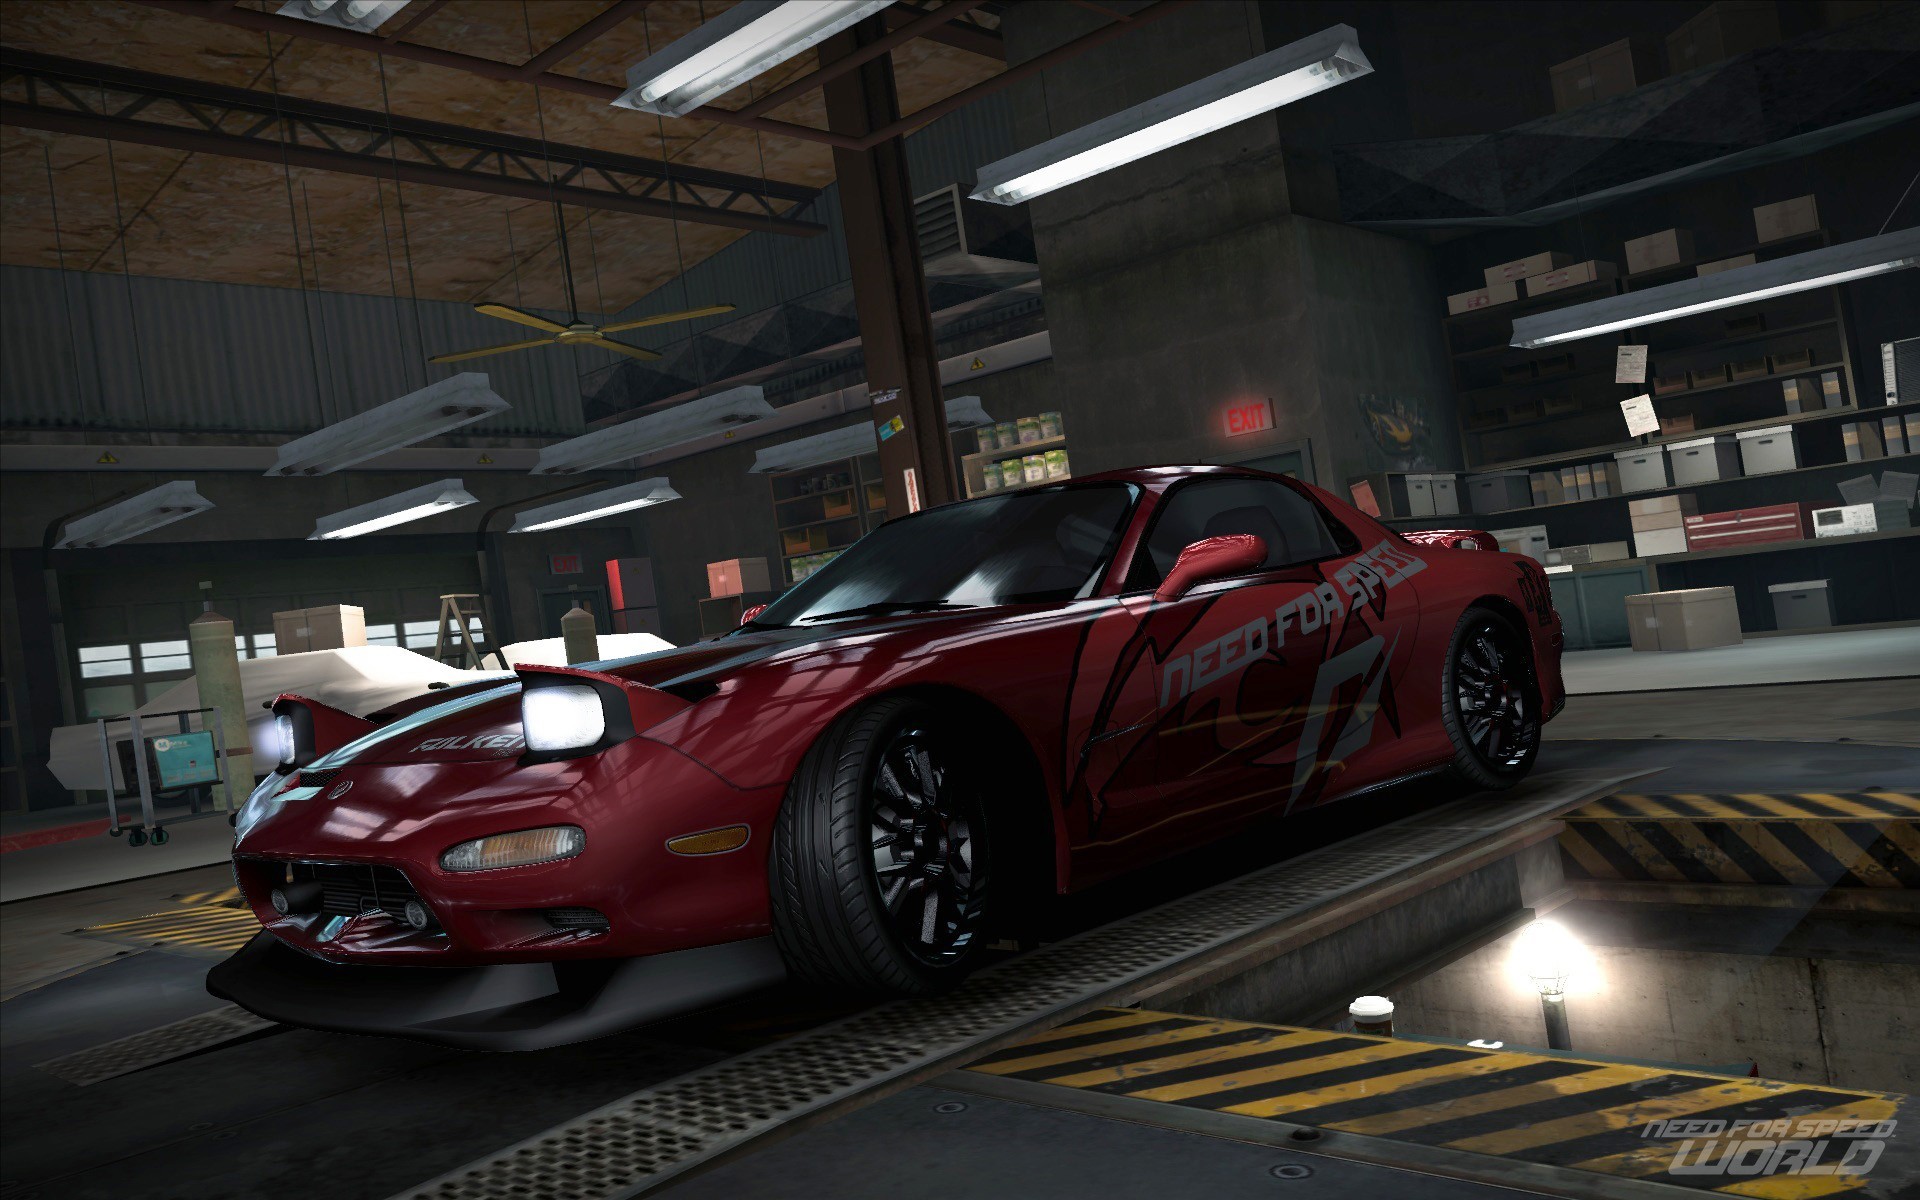 Descargar fondos de escritorio de Need For Speed: World HD